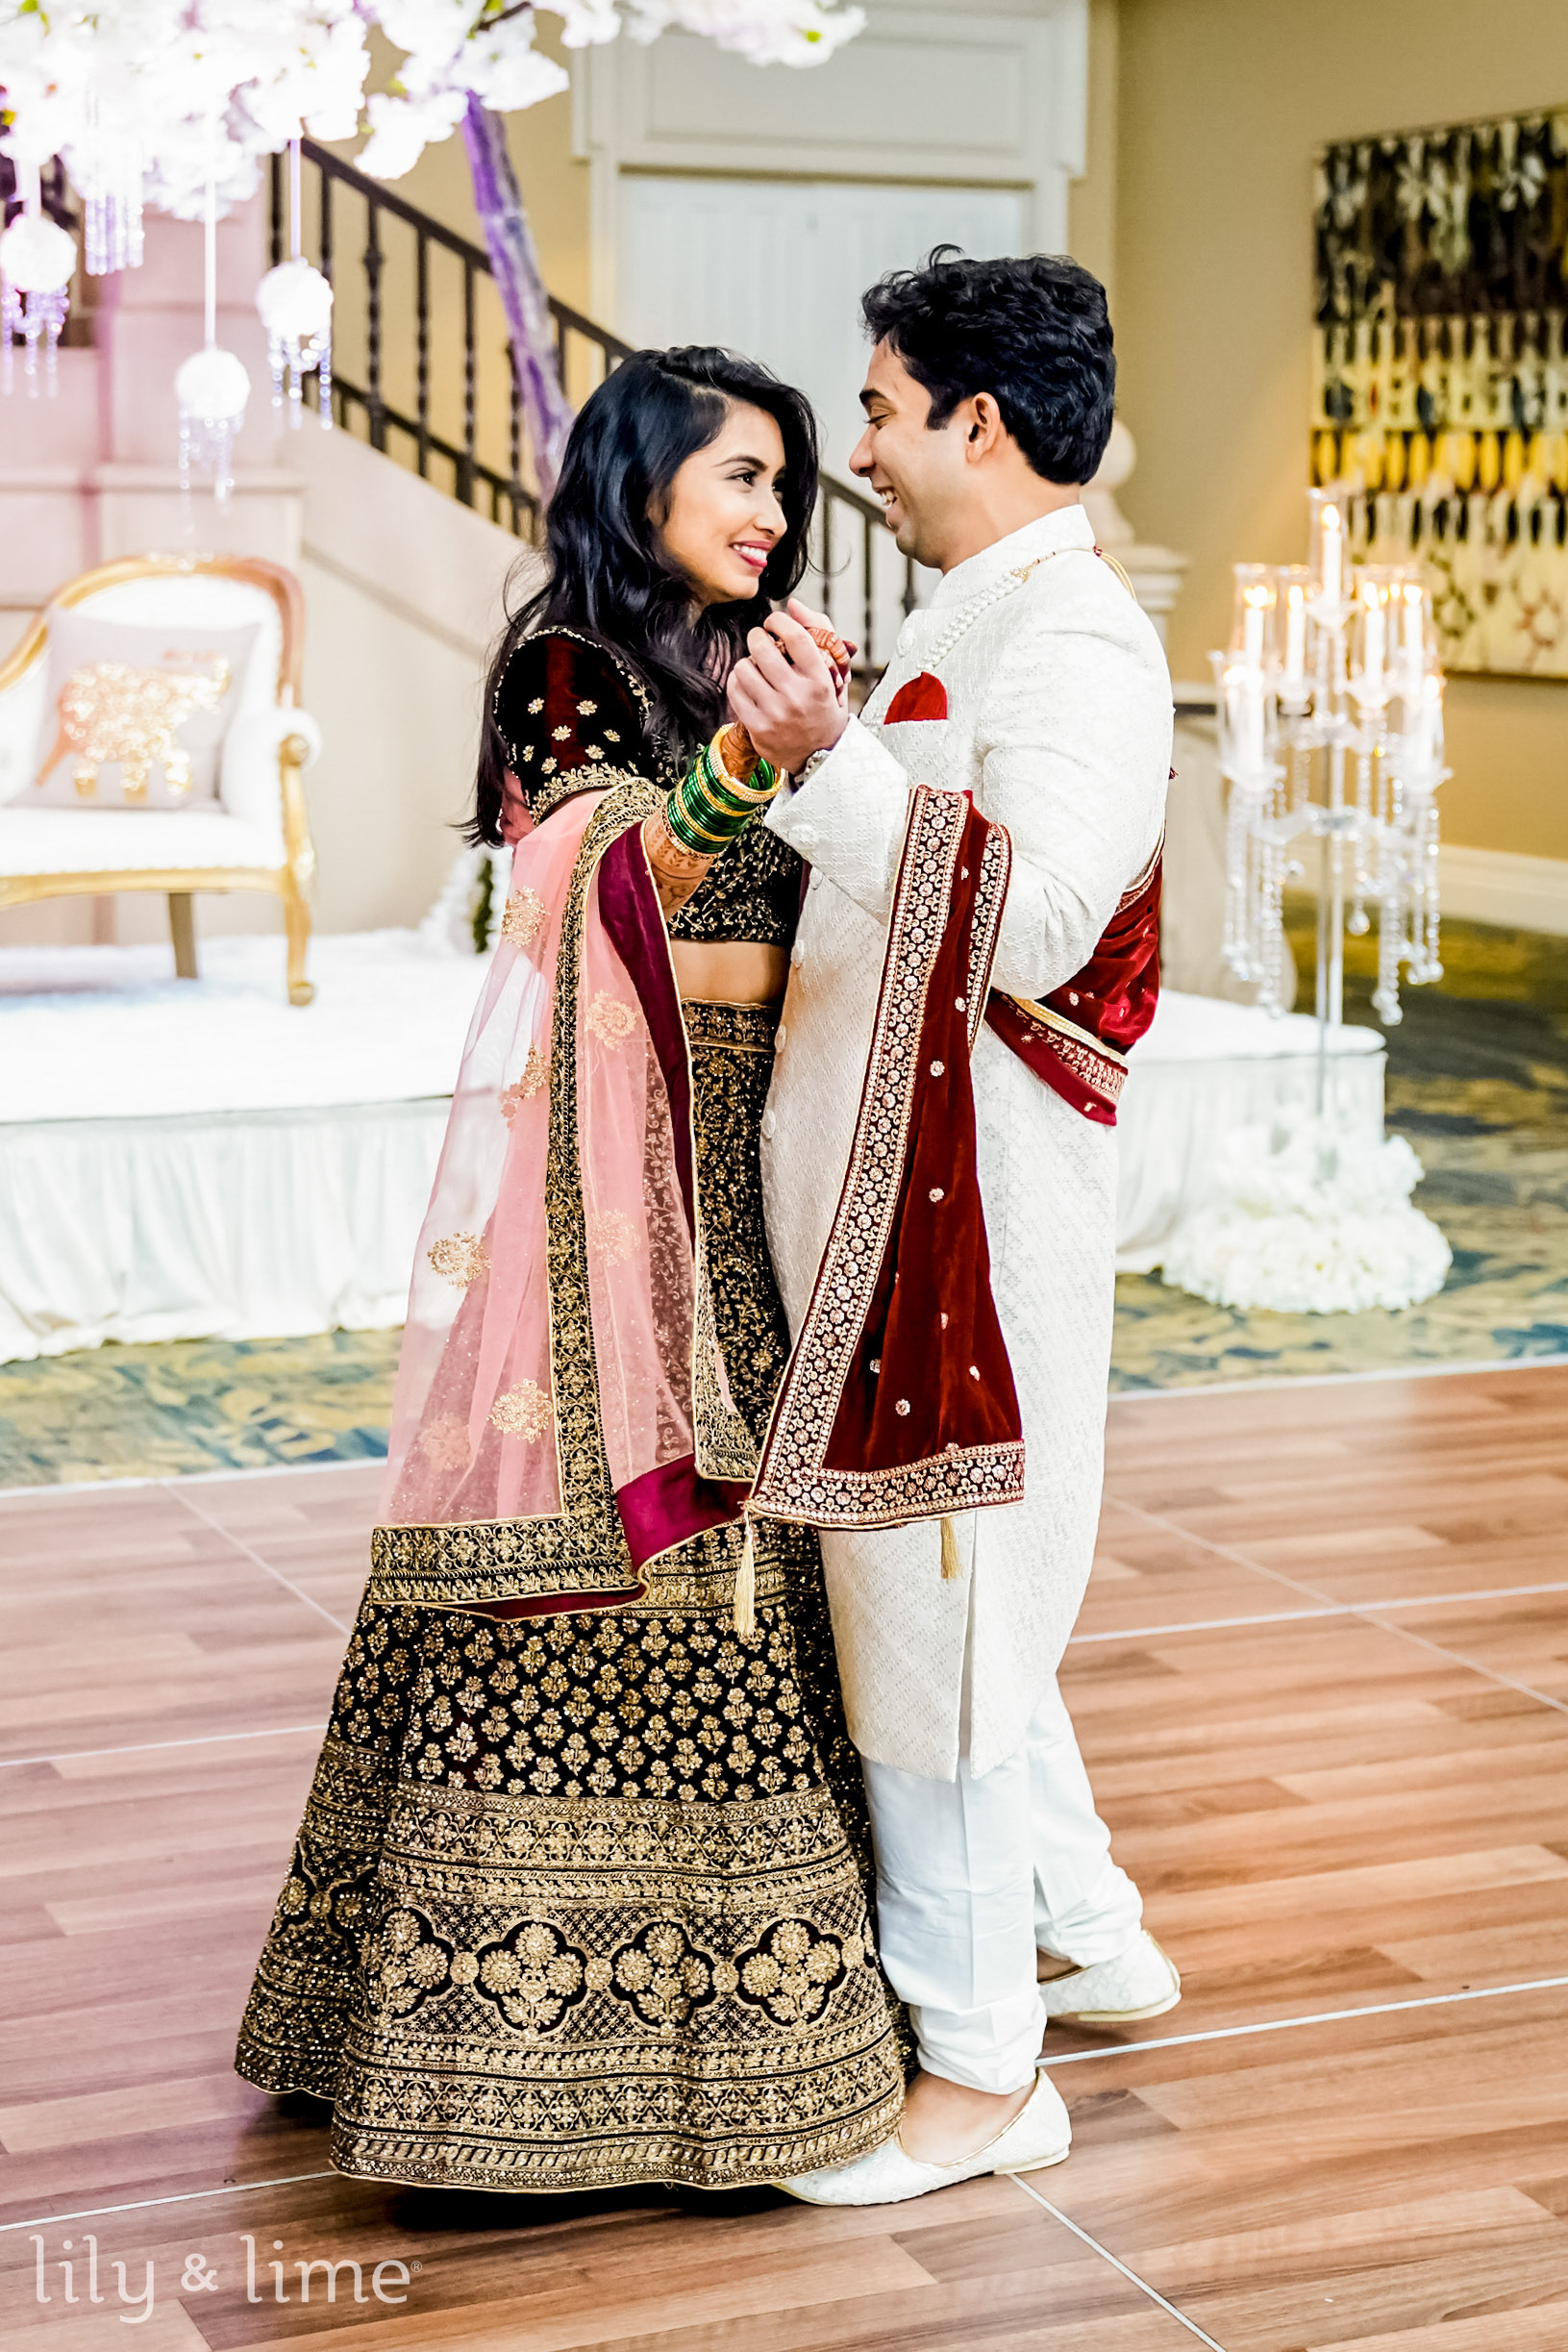 Indian wedding reception photography | Photo 67796